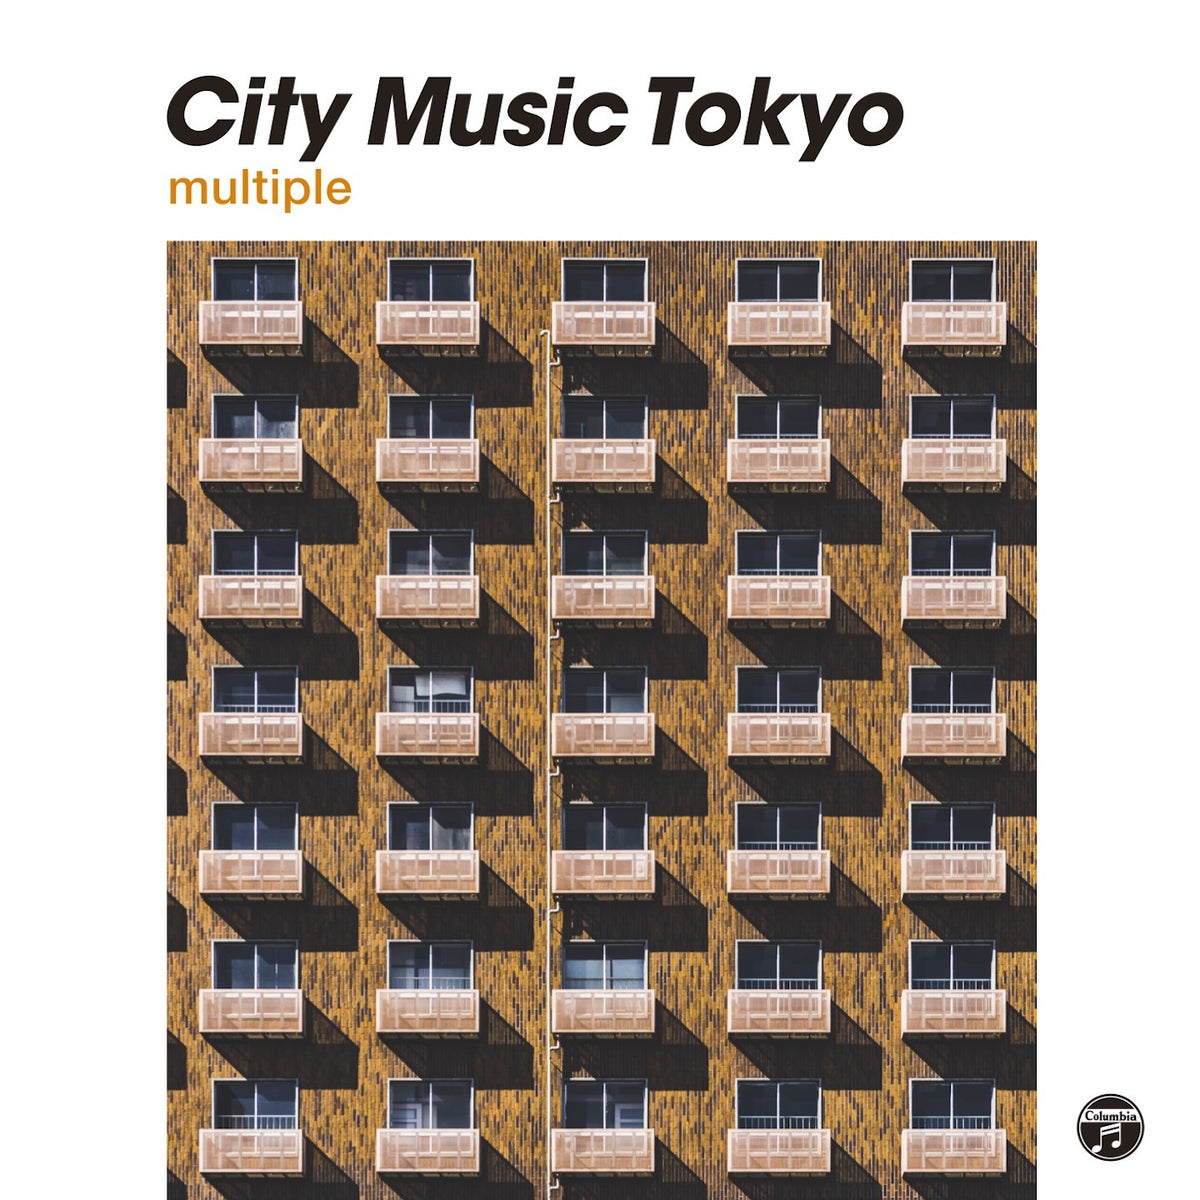 「CITY MUSIC TOKYO multiple